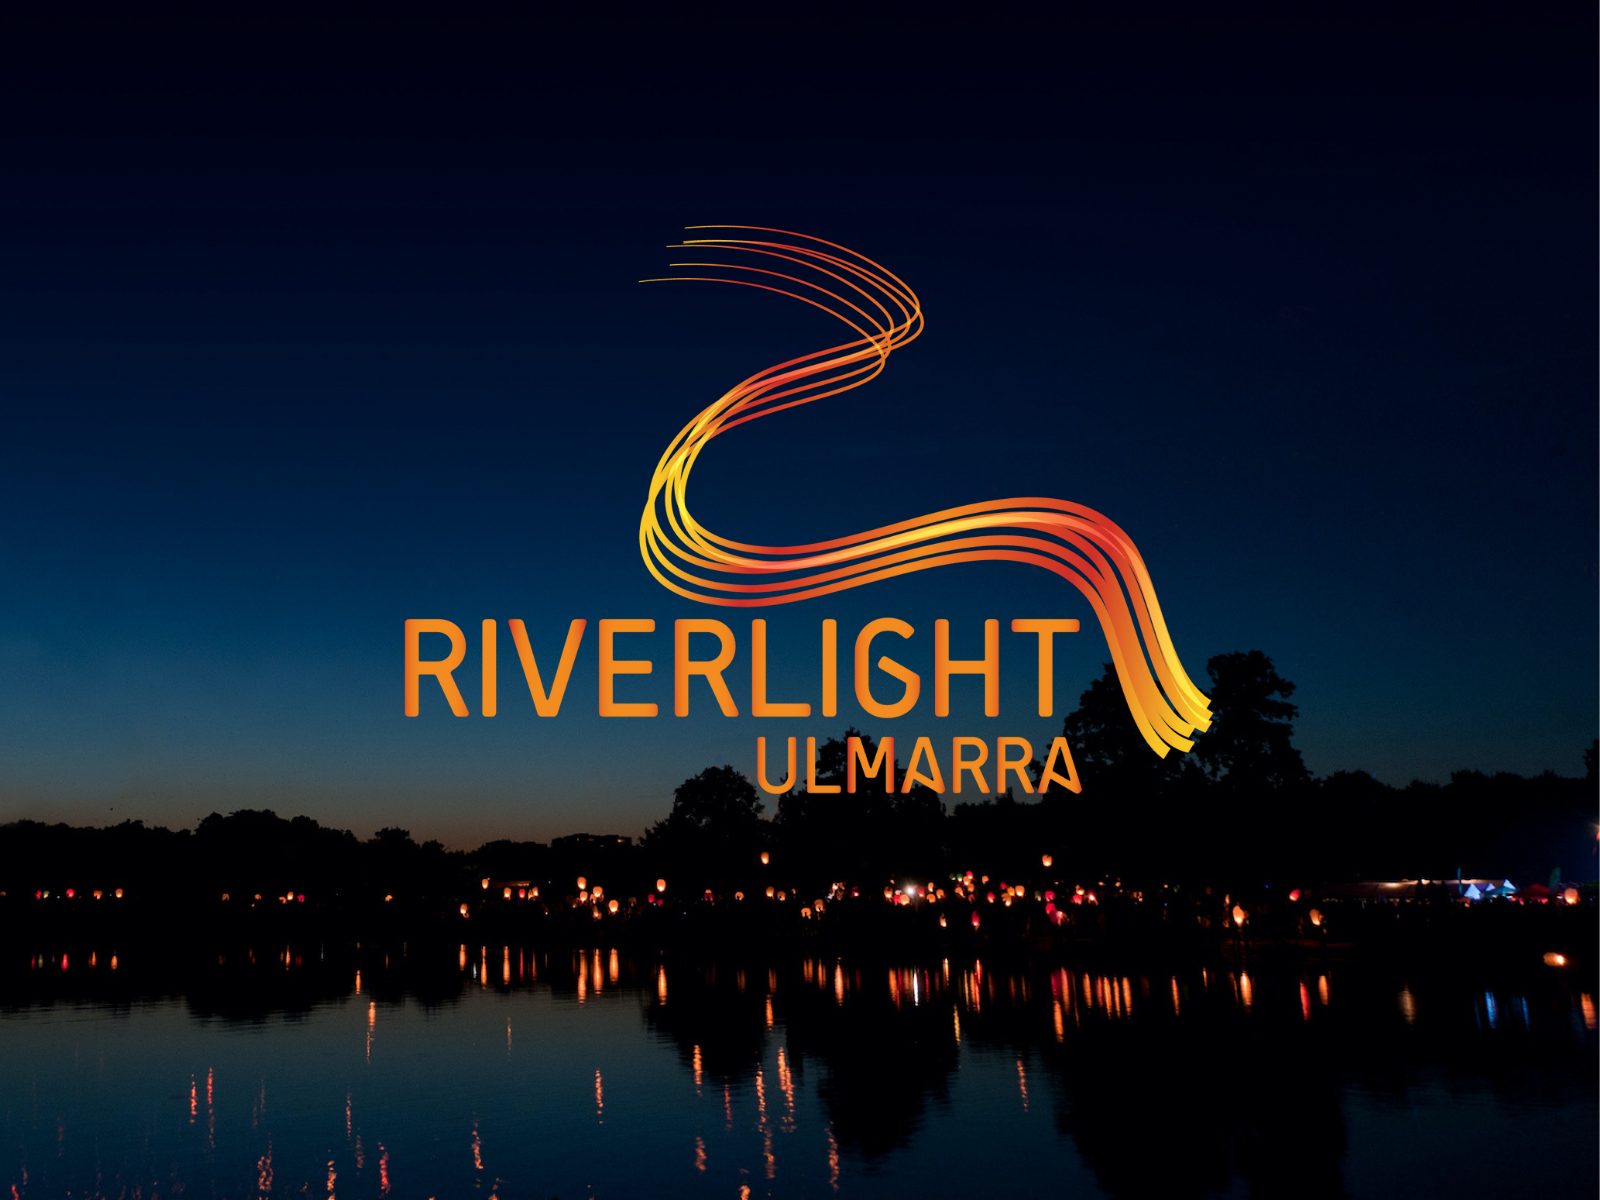 RIVERLIGHT ULMARRA LANTERN FESTIVAL